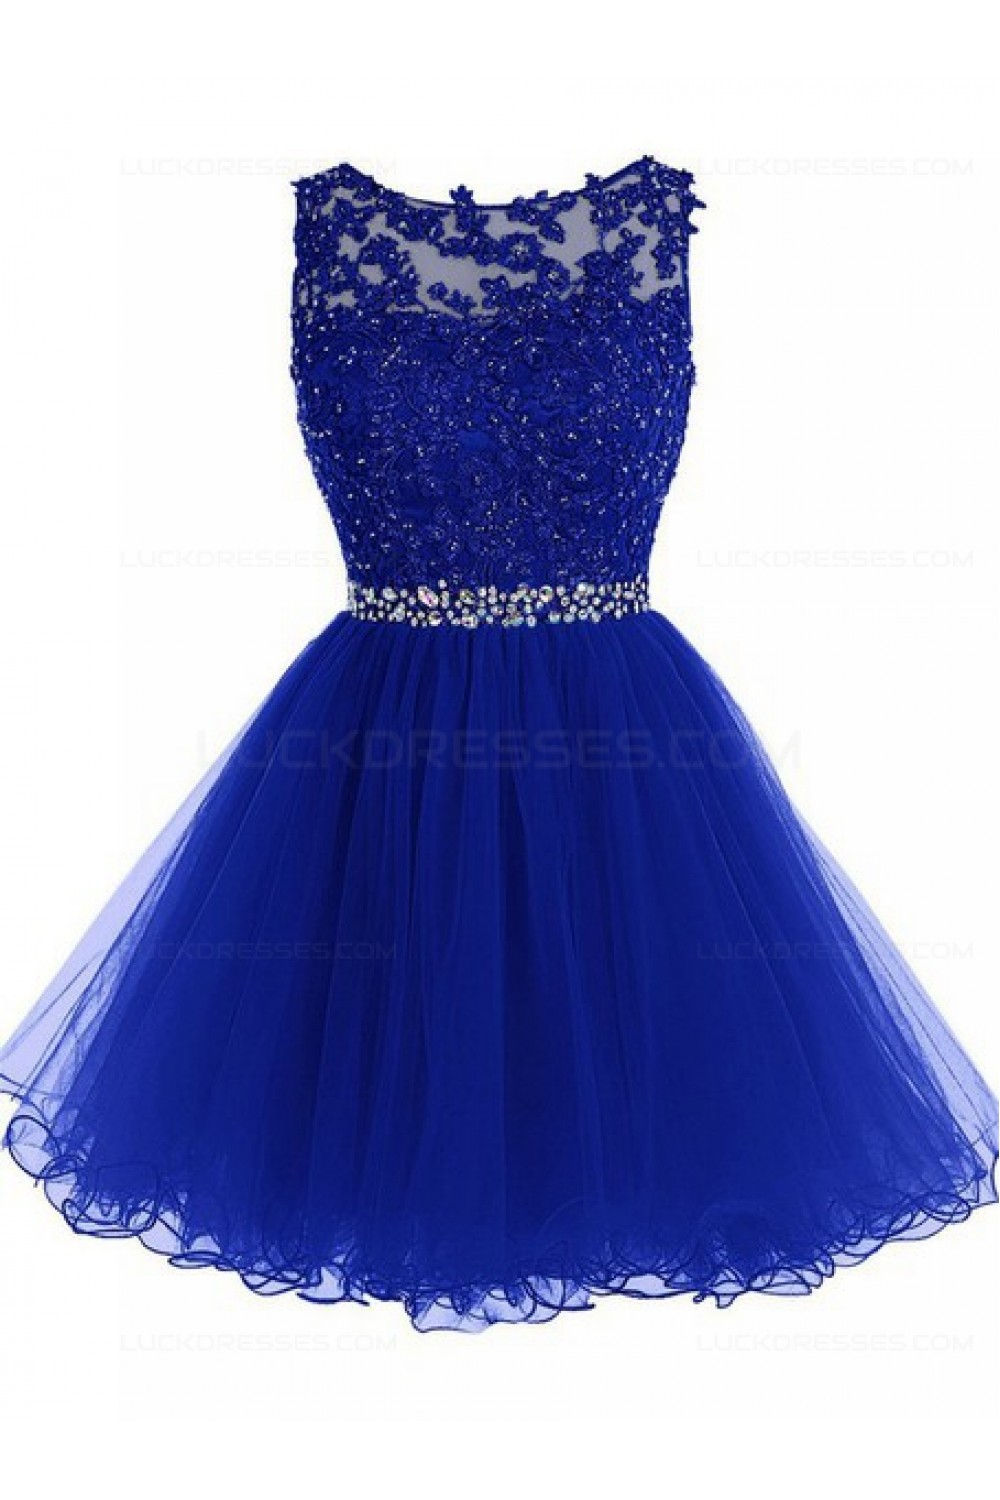 royal blue confirmation dresses